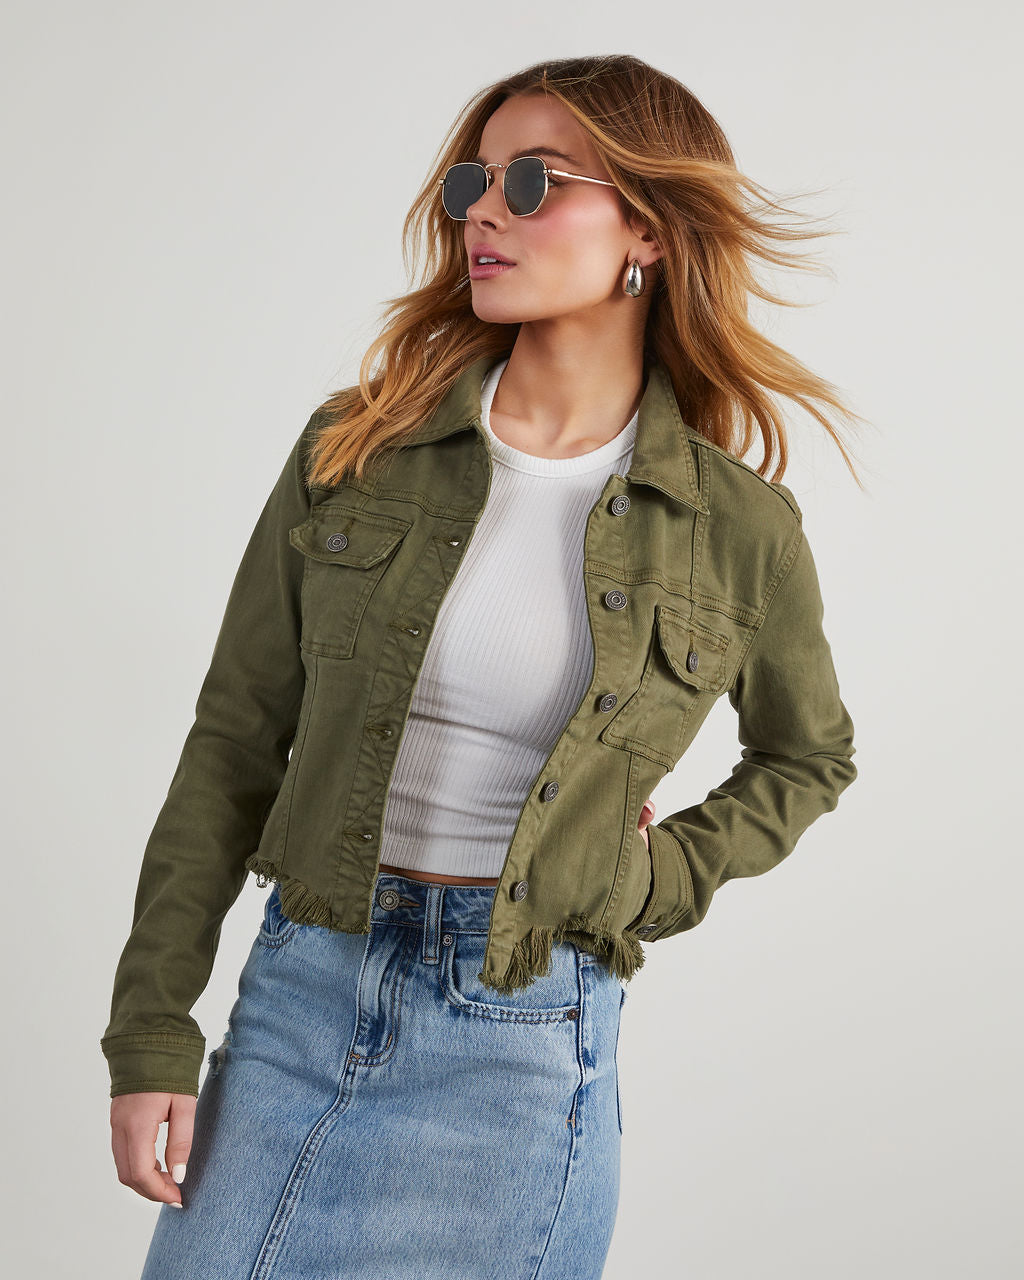 Marc Jacobs women's khaki green denim military jean jacket 6 button detail  | eBay